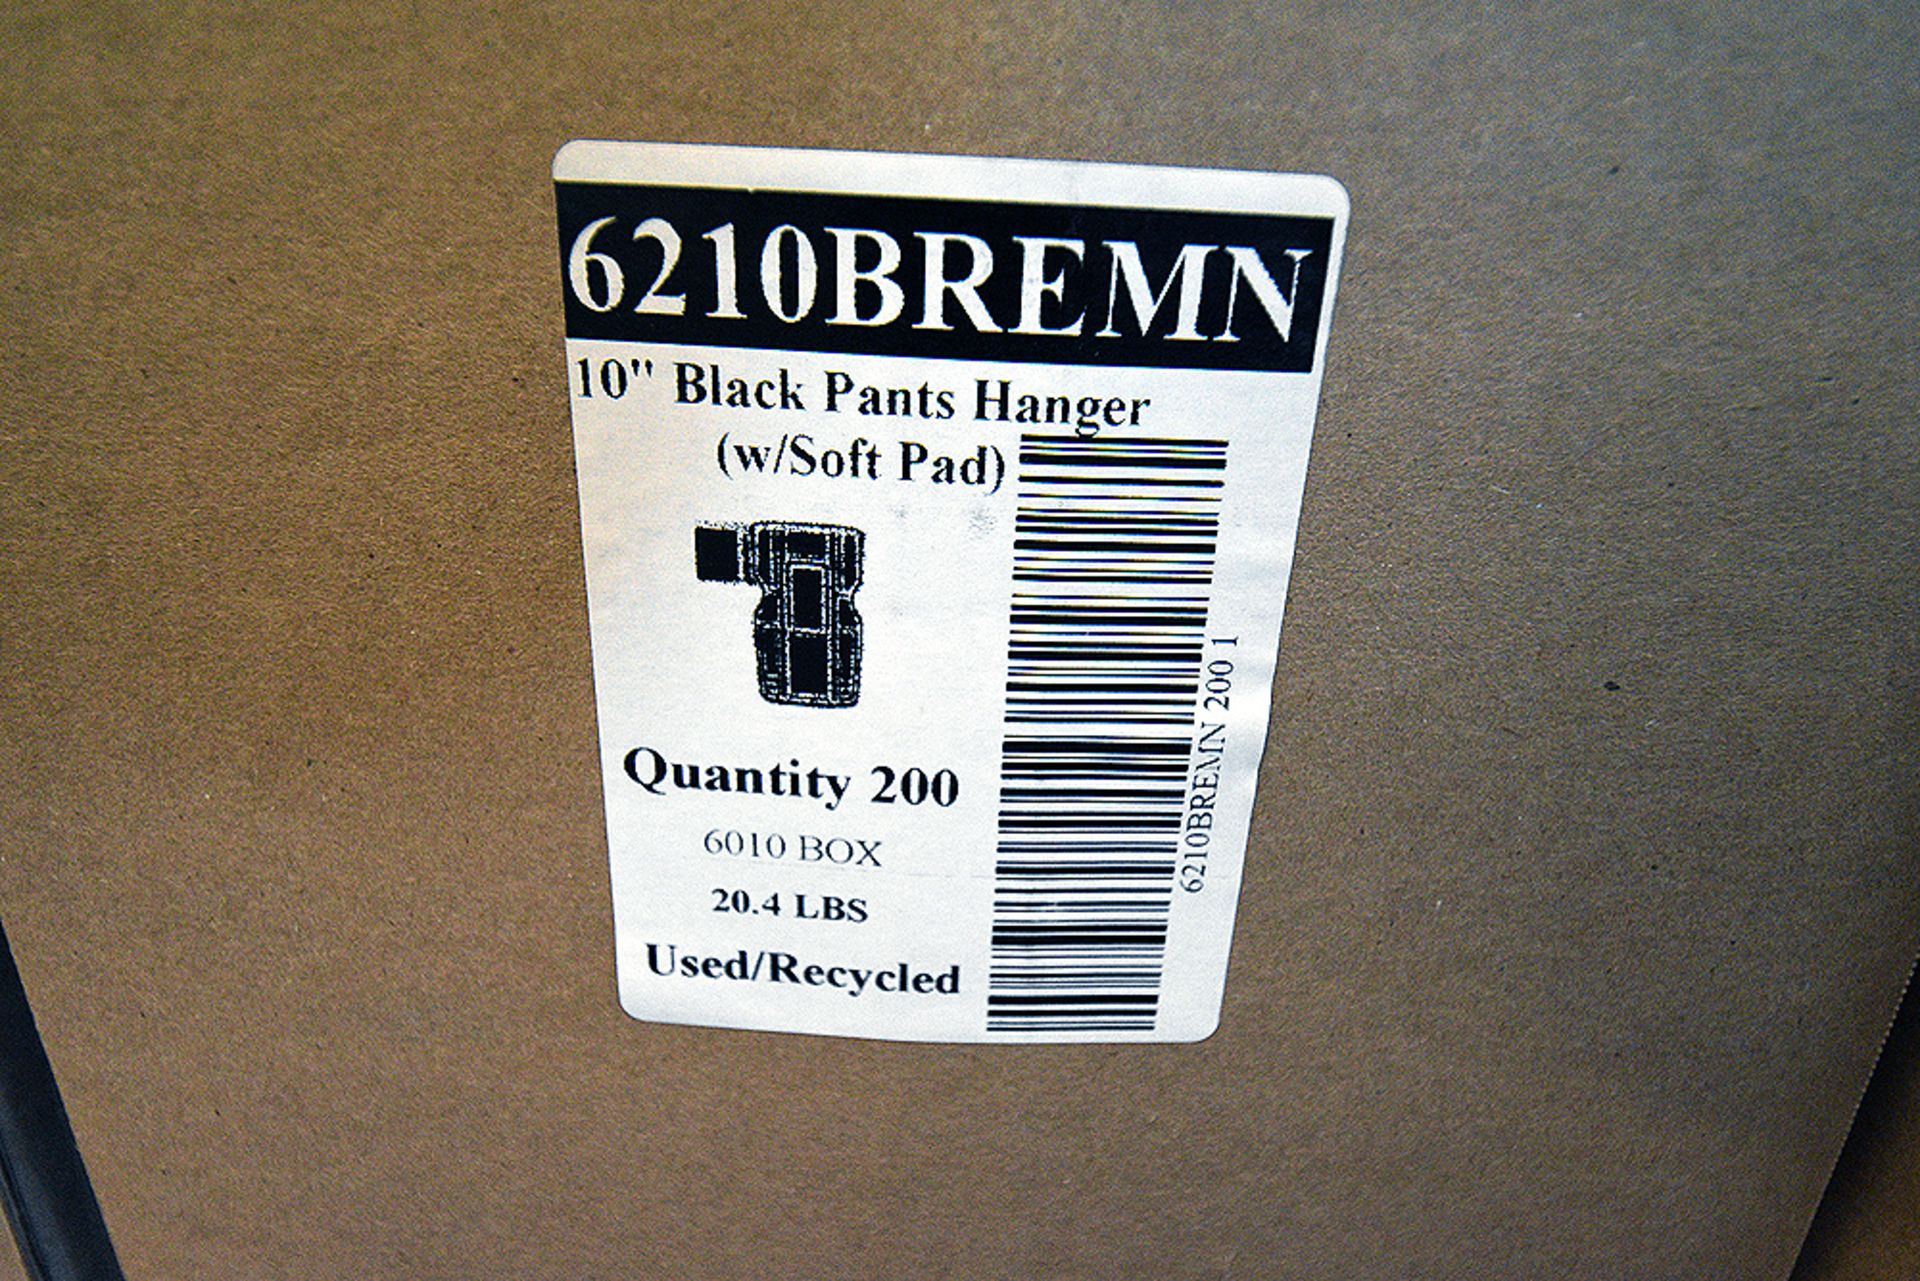 Cases of 6210 Bremm 10" Black Pants Hangers - Image 2 of 3